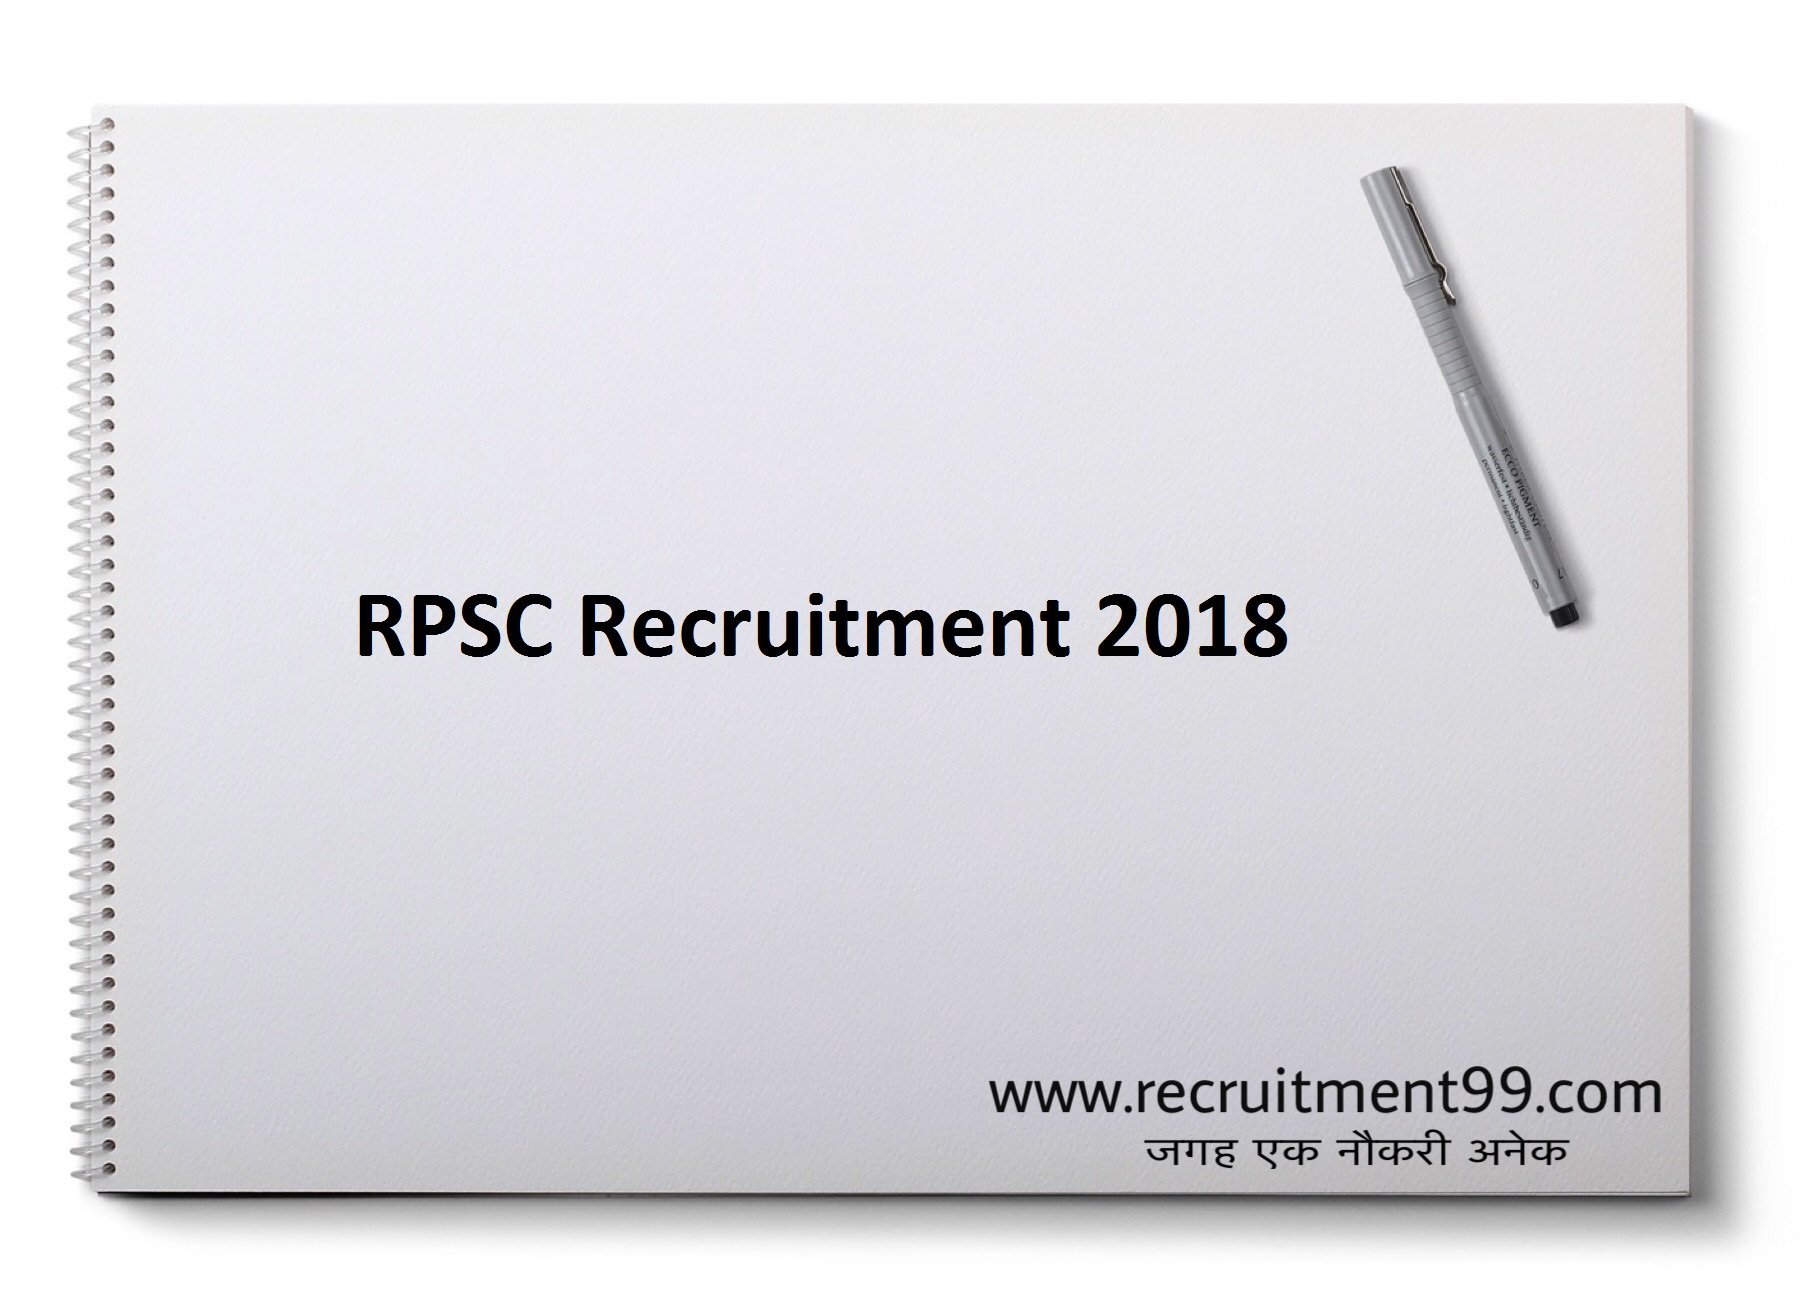 RPSC LDC (Lower Division Clerk) Recruitment Admit Card result 2018